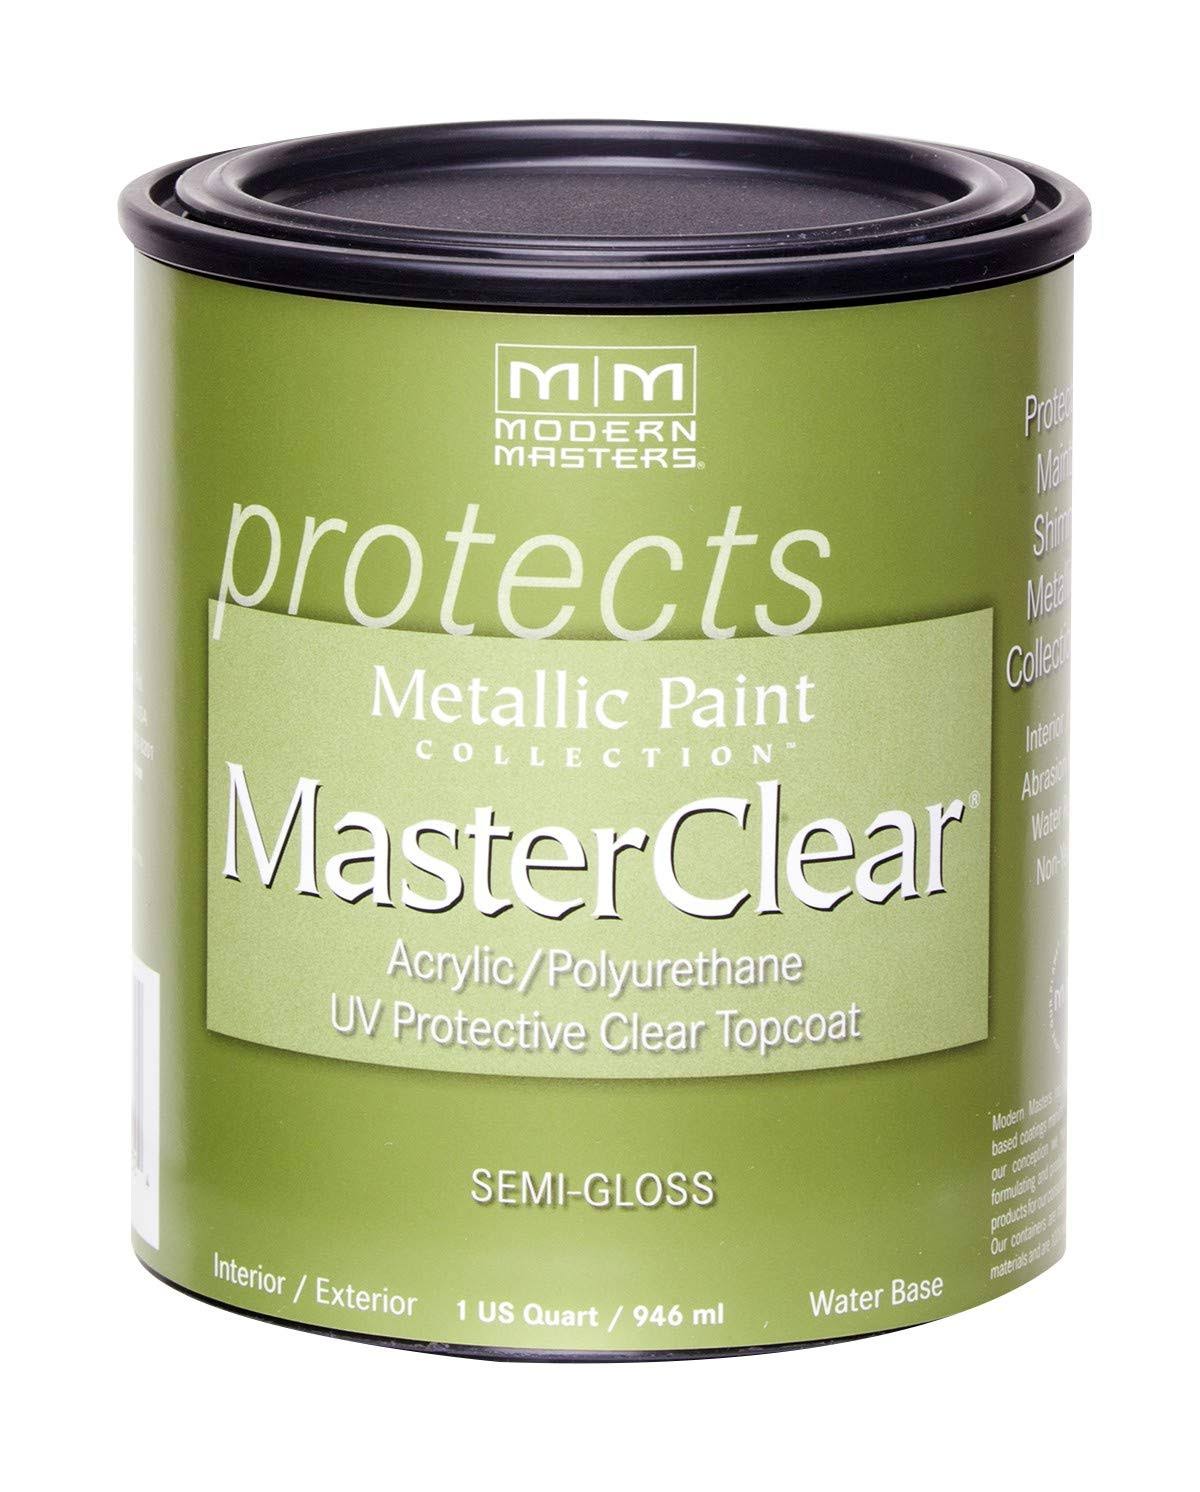 Modern Masters Metallic Paint - Master Clear, Semi-Gloss, 946ml